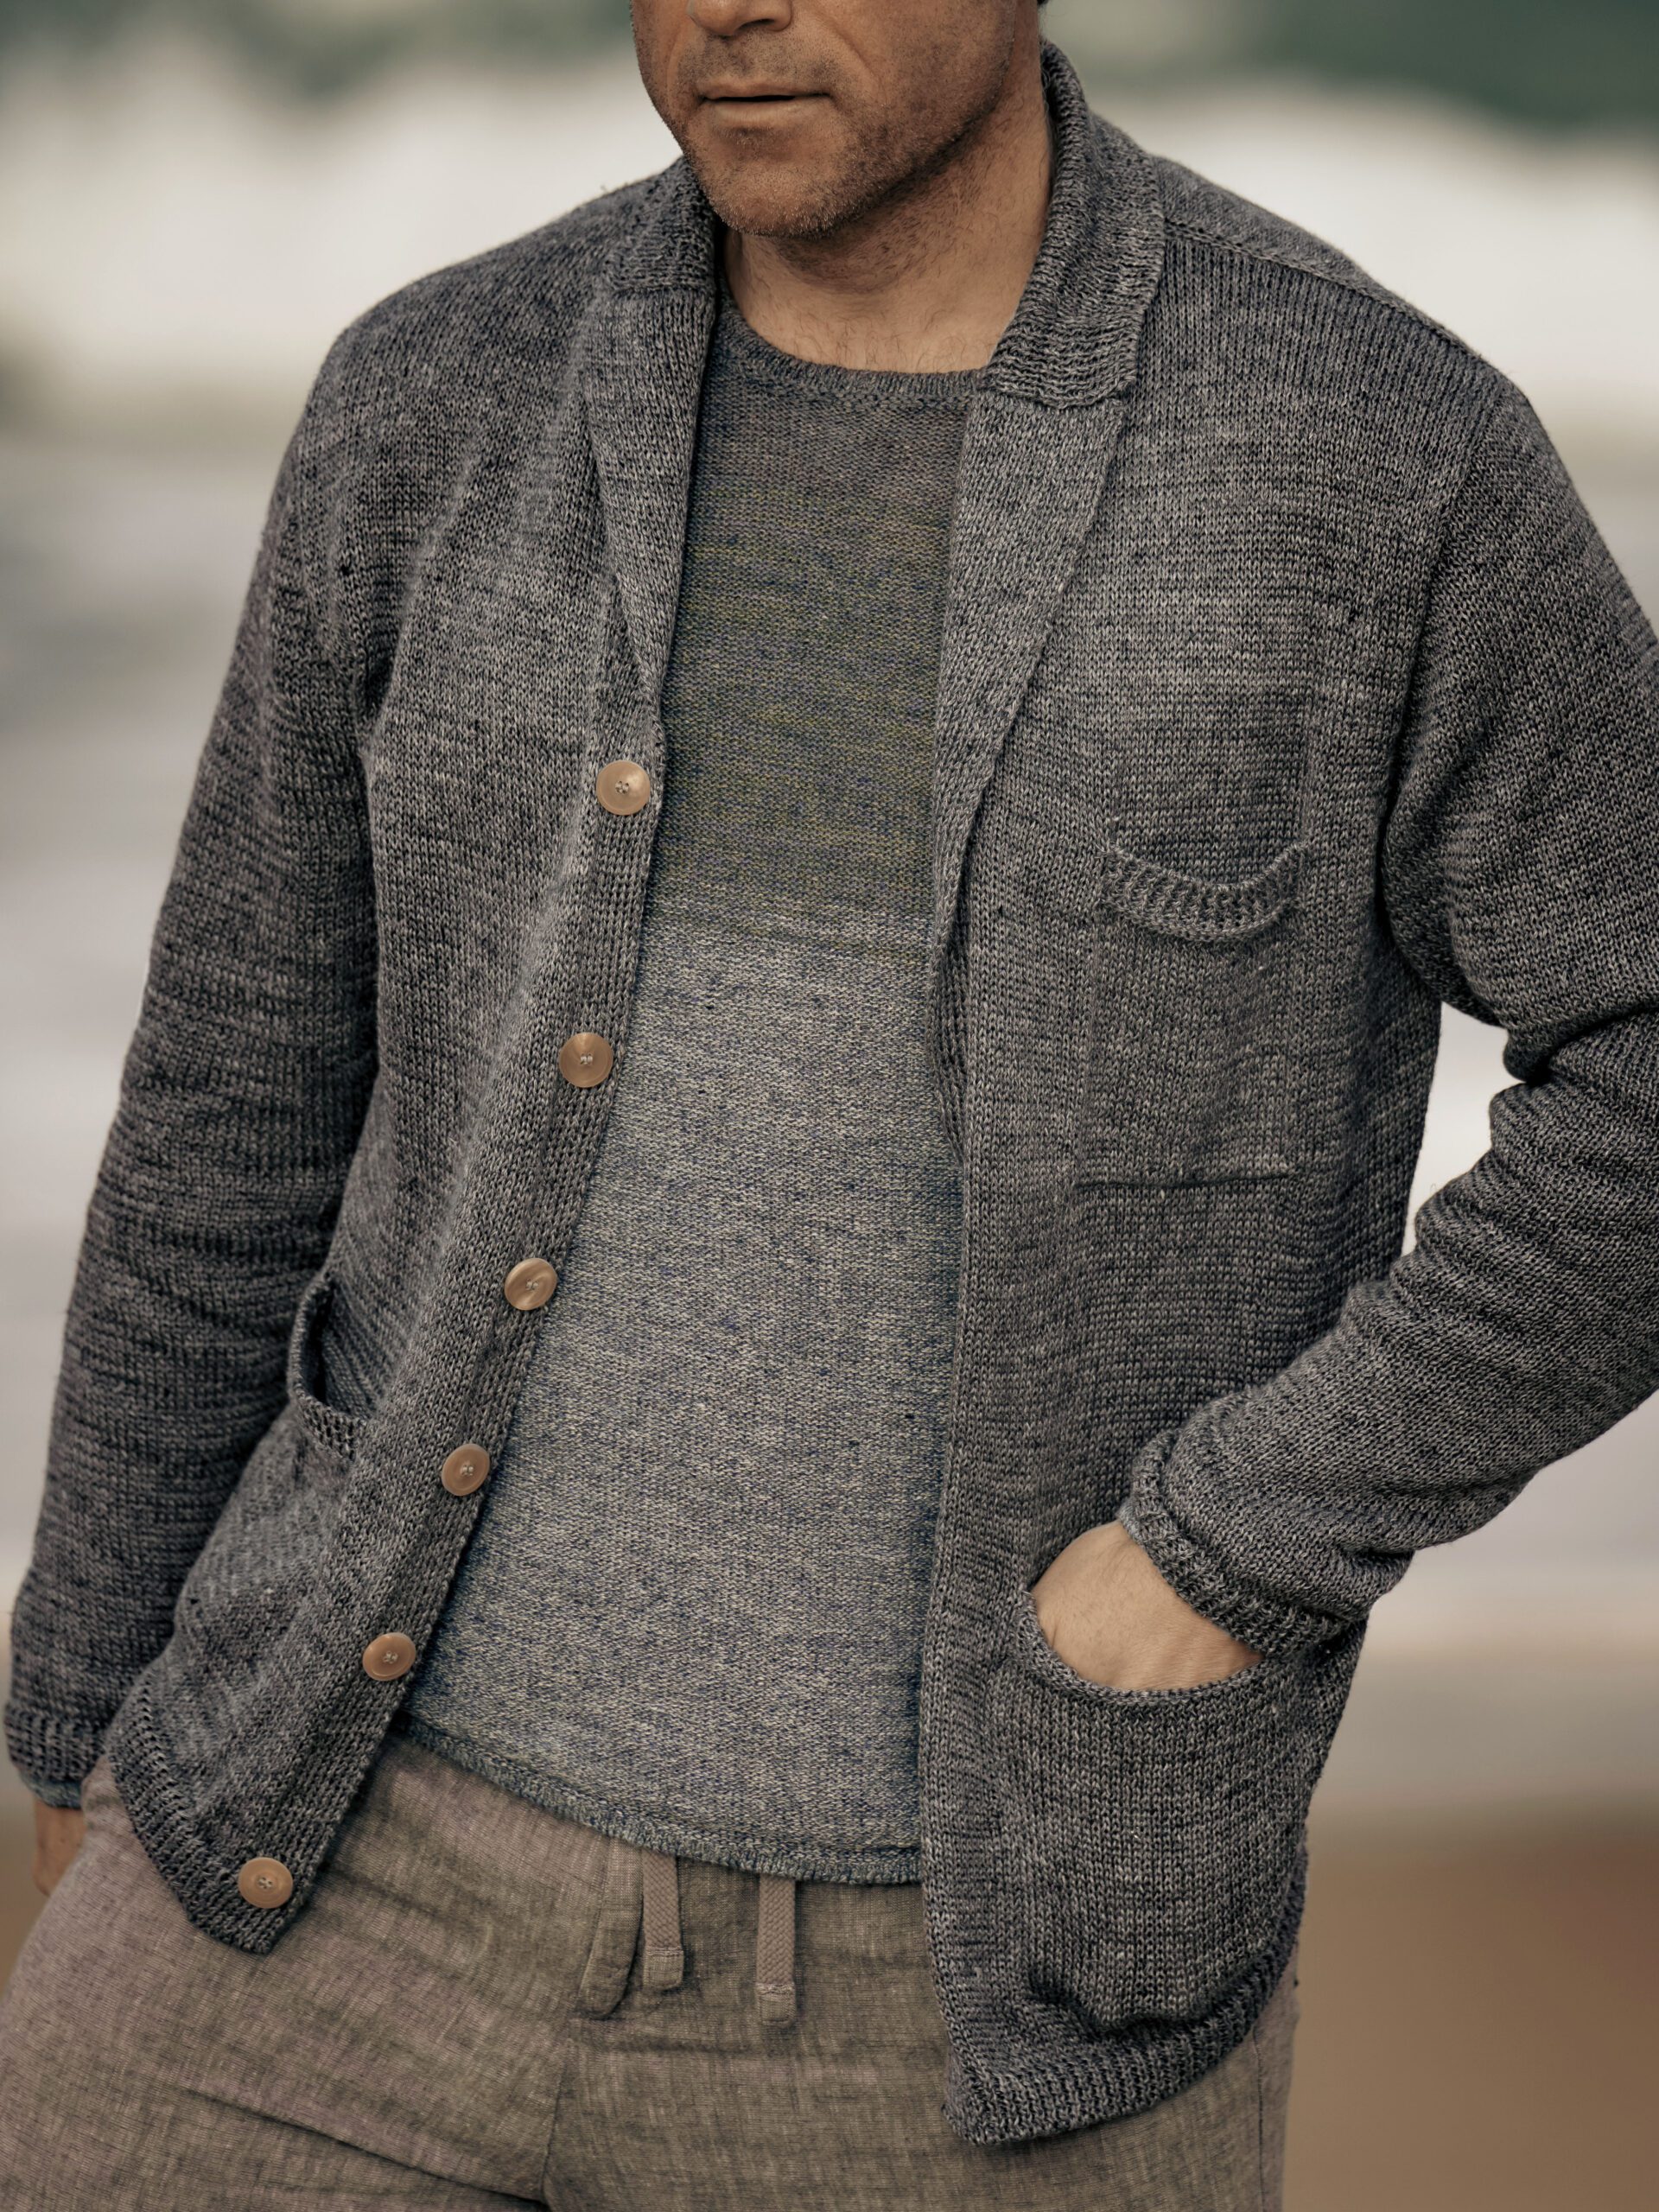 Knitted Linen Pub Jacket for Men — Inis Meáin Knitwear